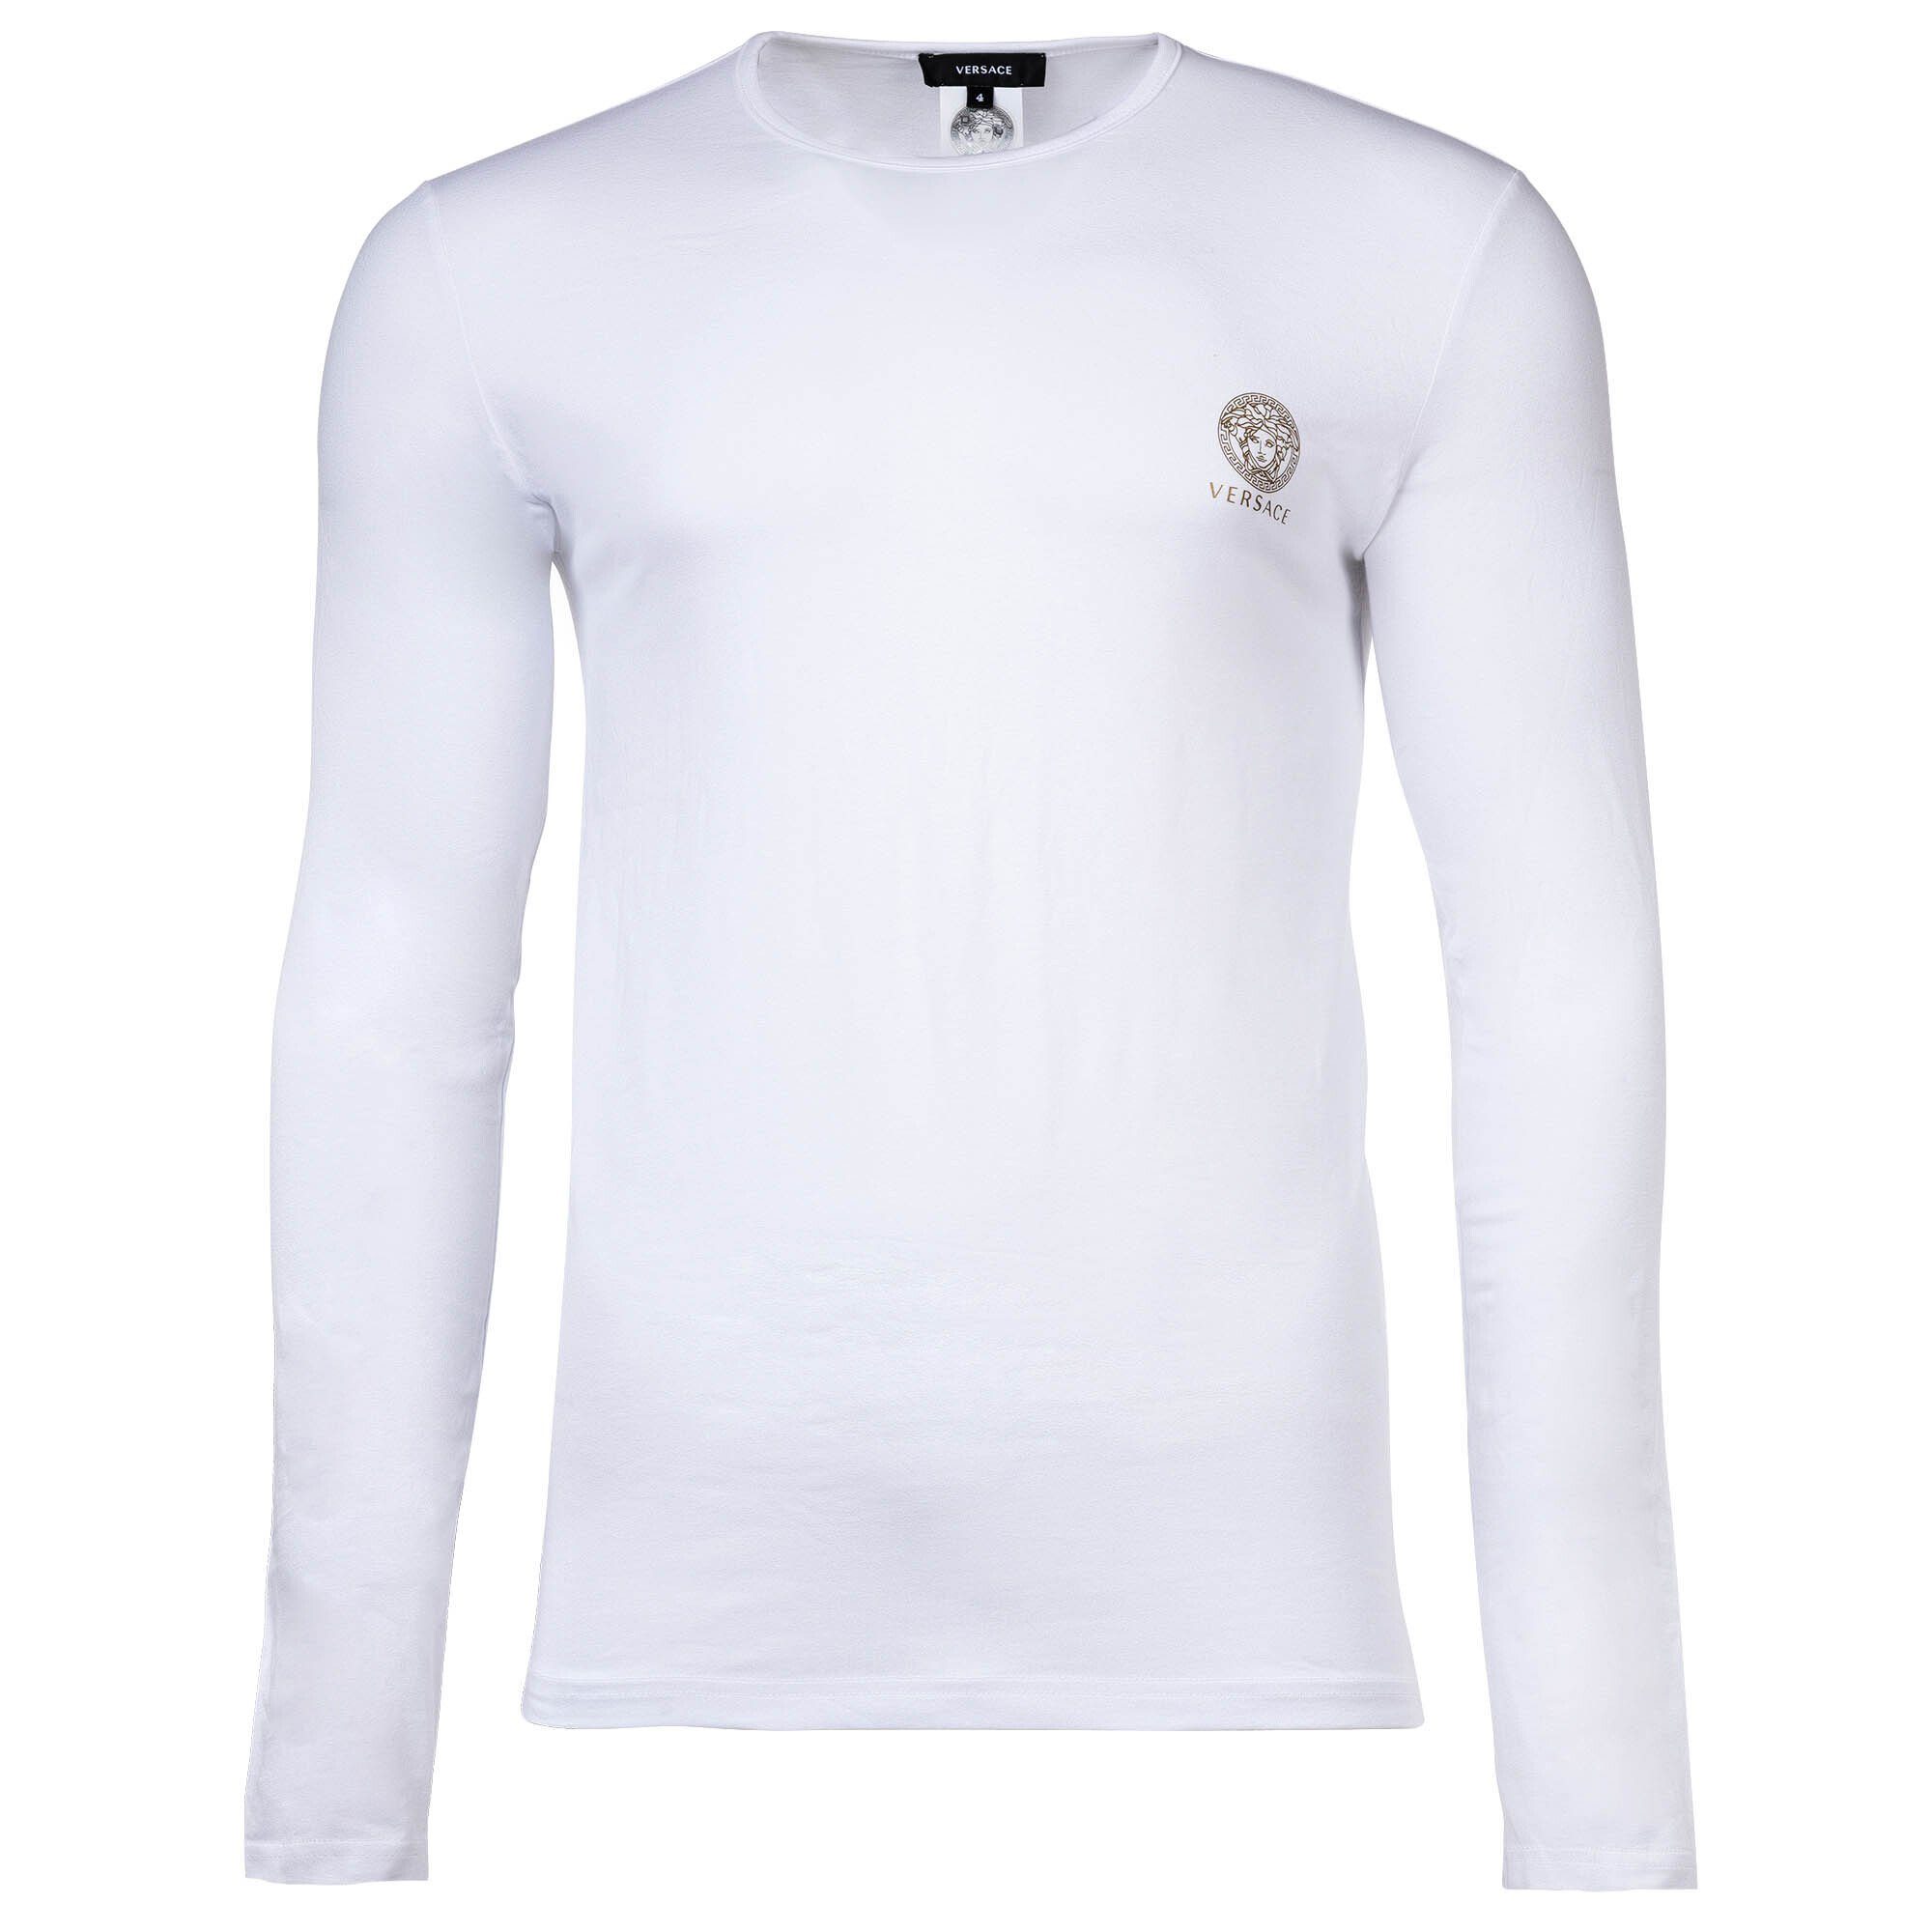 Versace T-Shirt Herren Shirt - langarm, Sweatshirt, Rundhals Weiß